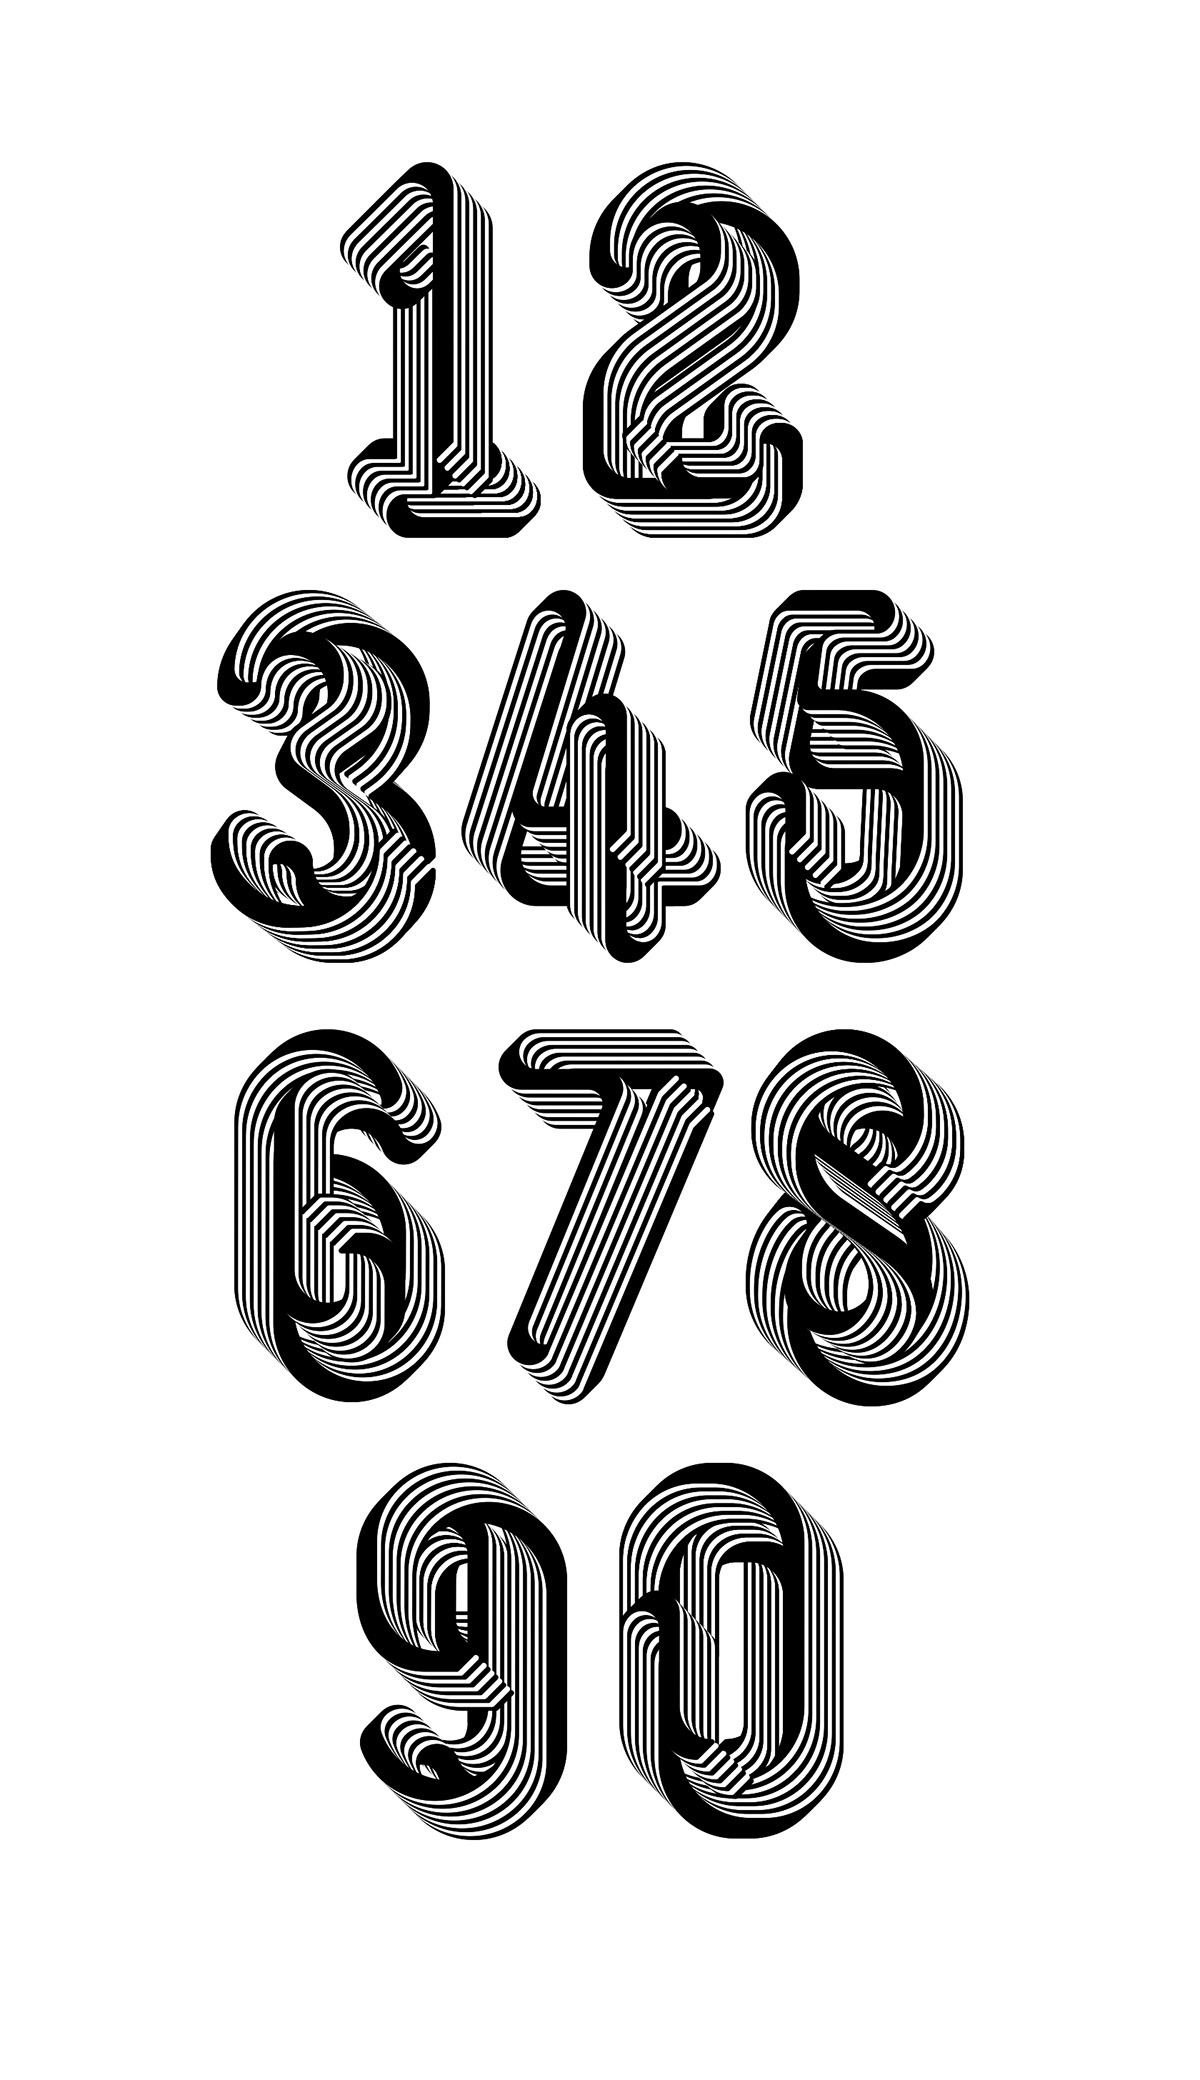 Andrew Footit时尚前卫的个性文字设计，创意字体设计作品。